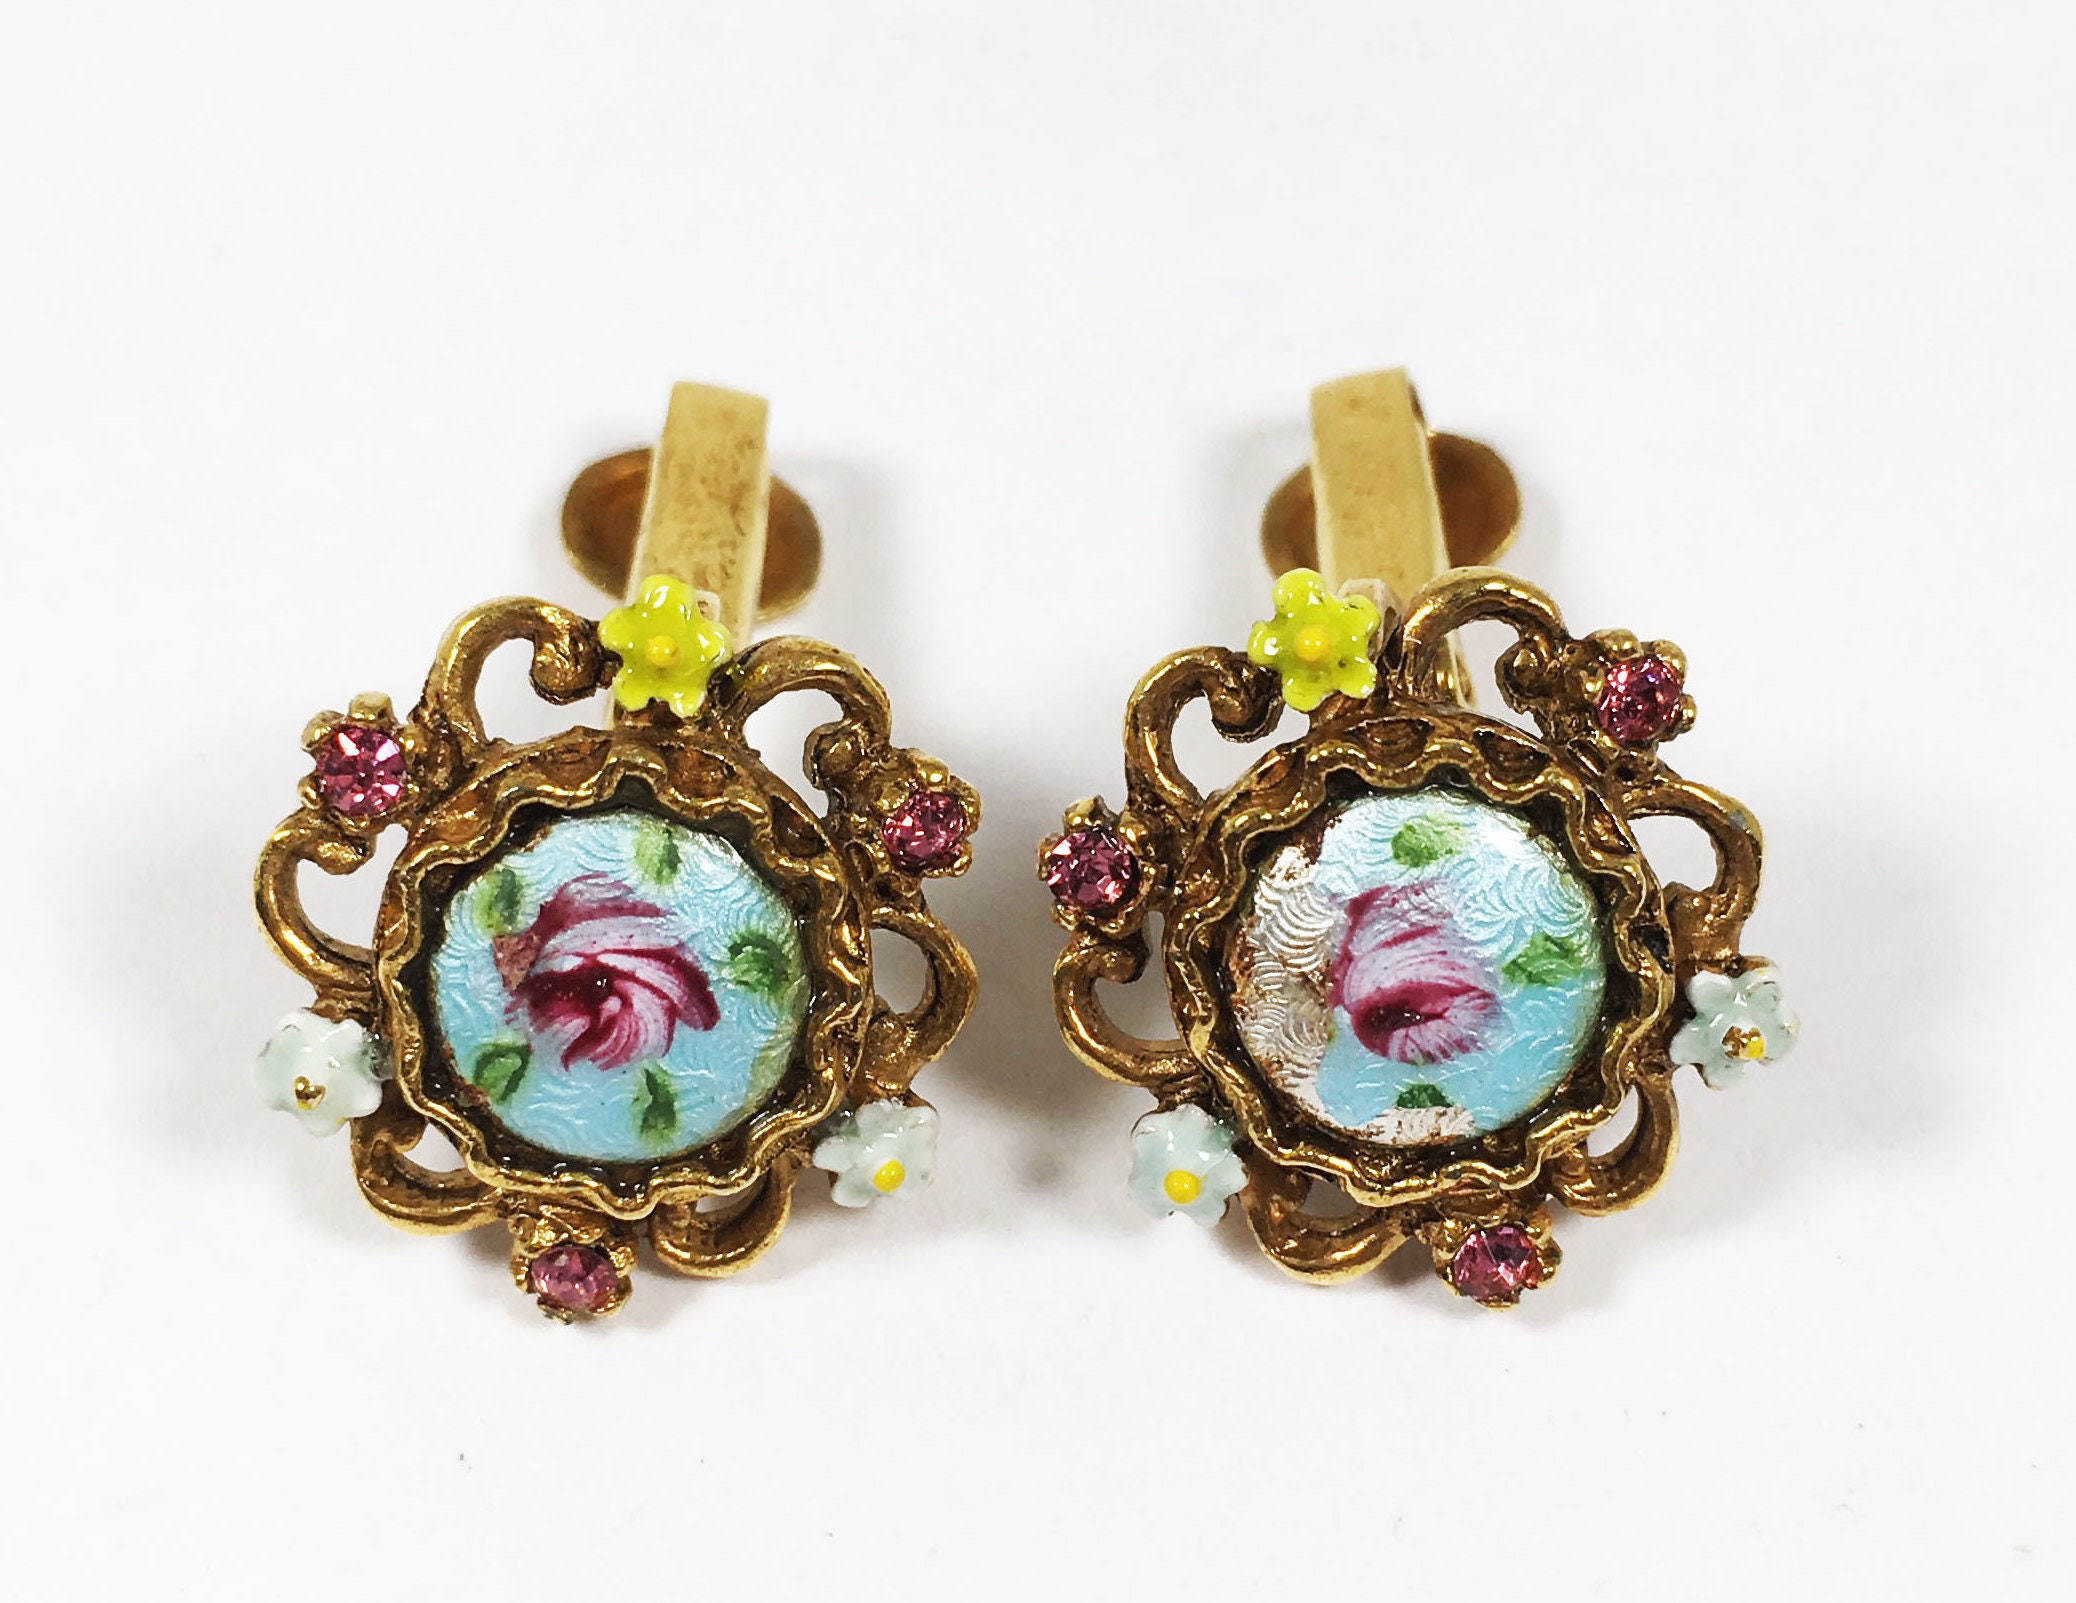 1 Box DIY 10 Pairs Glass Petal Charms Flower Charms Earring Making